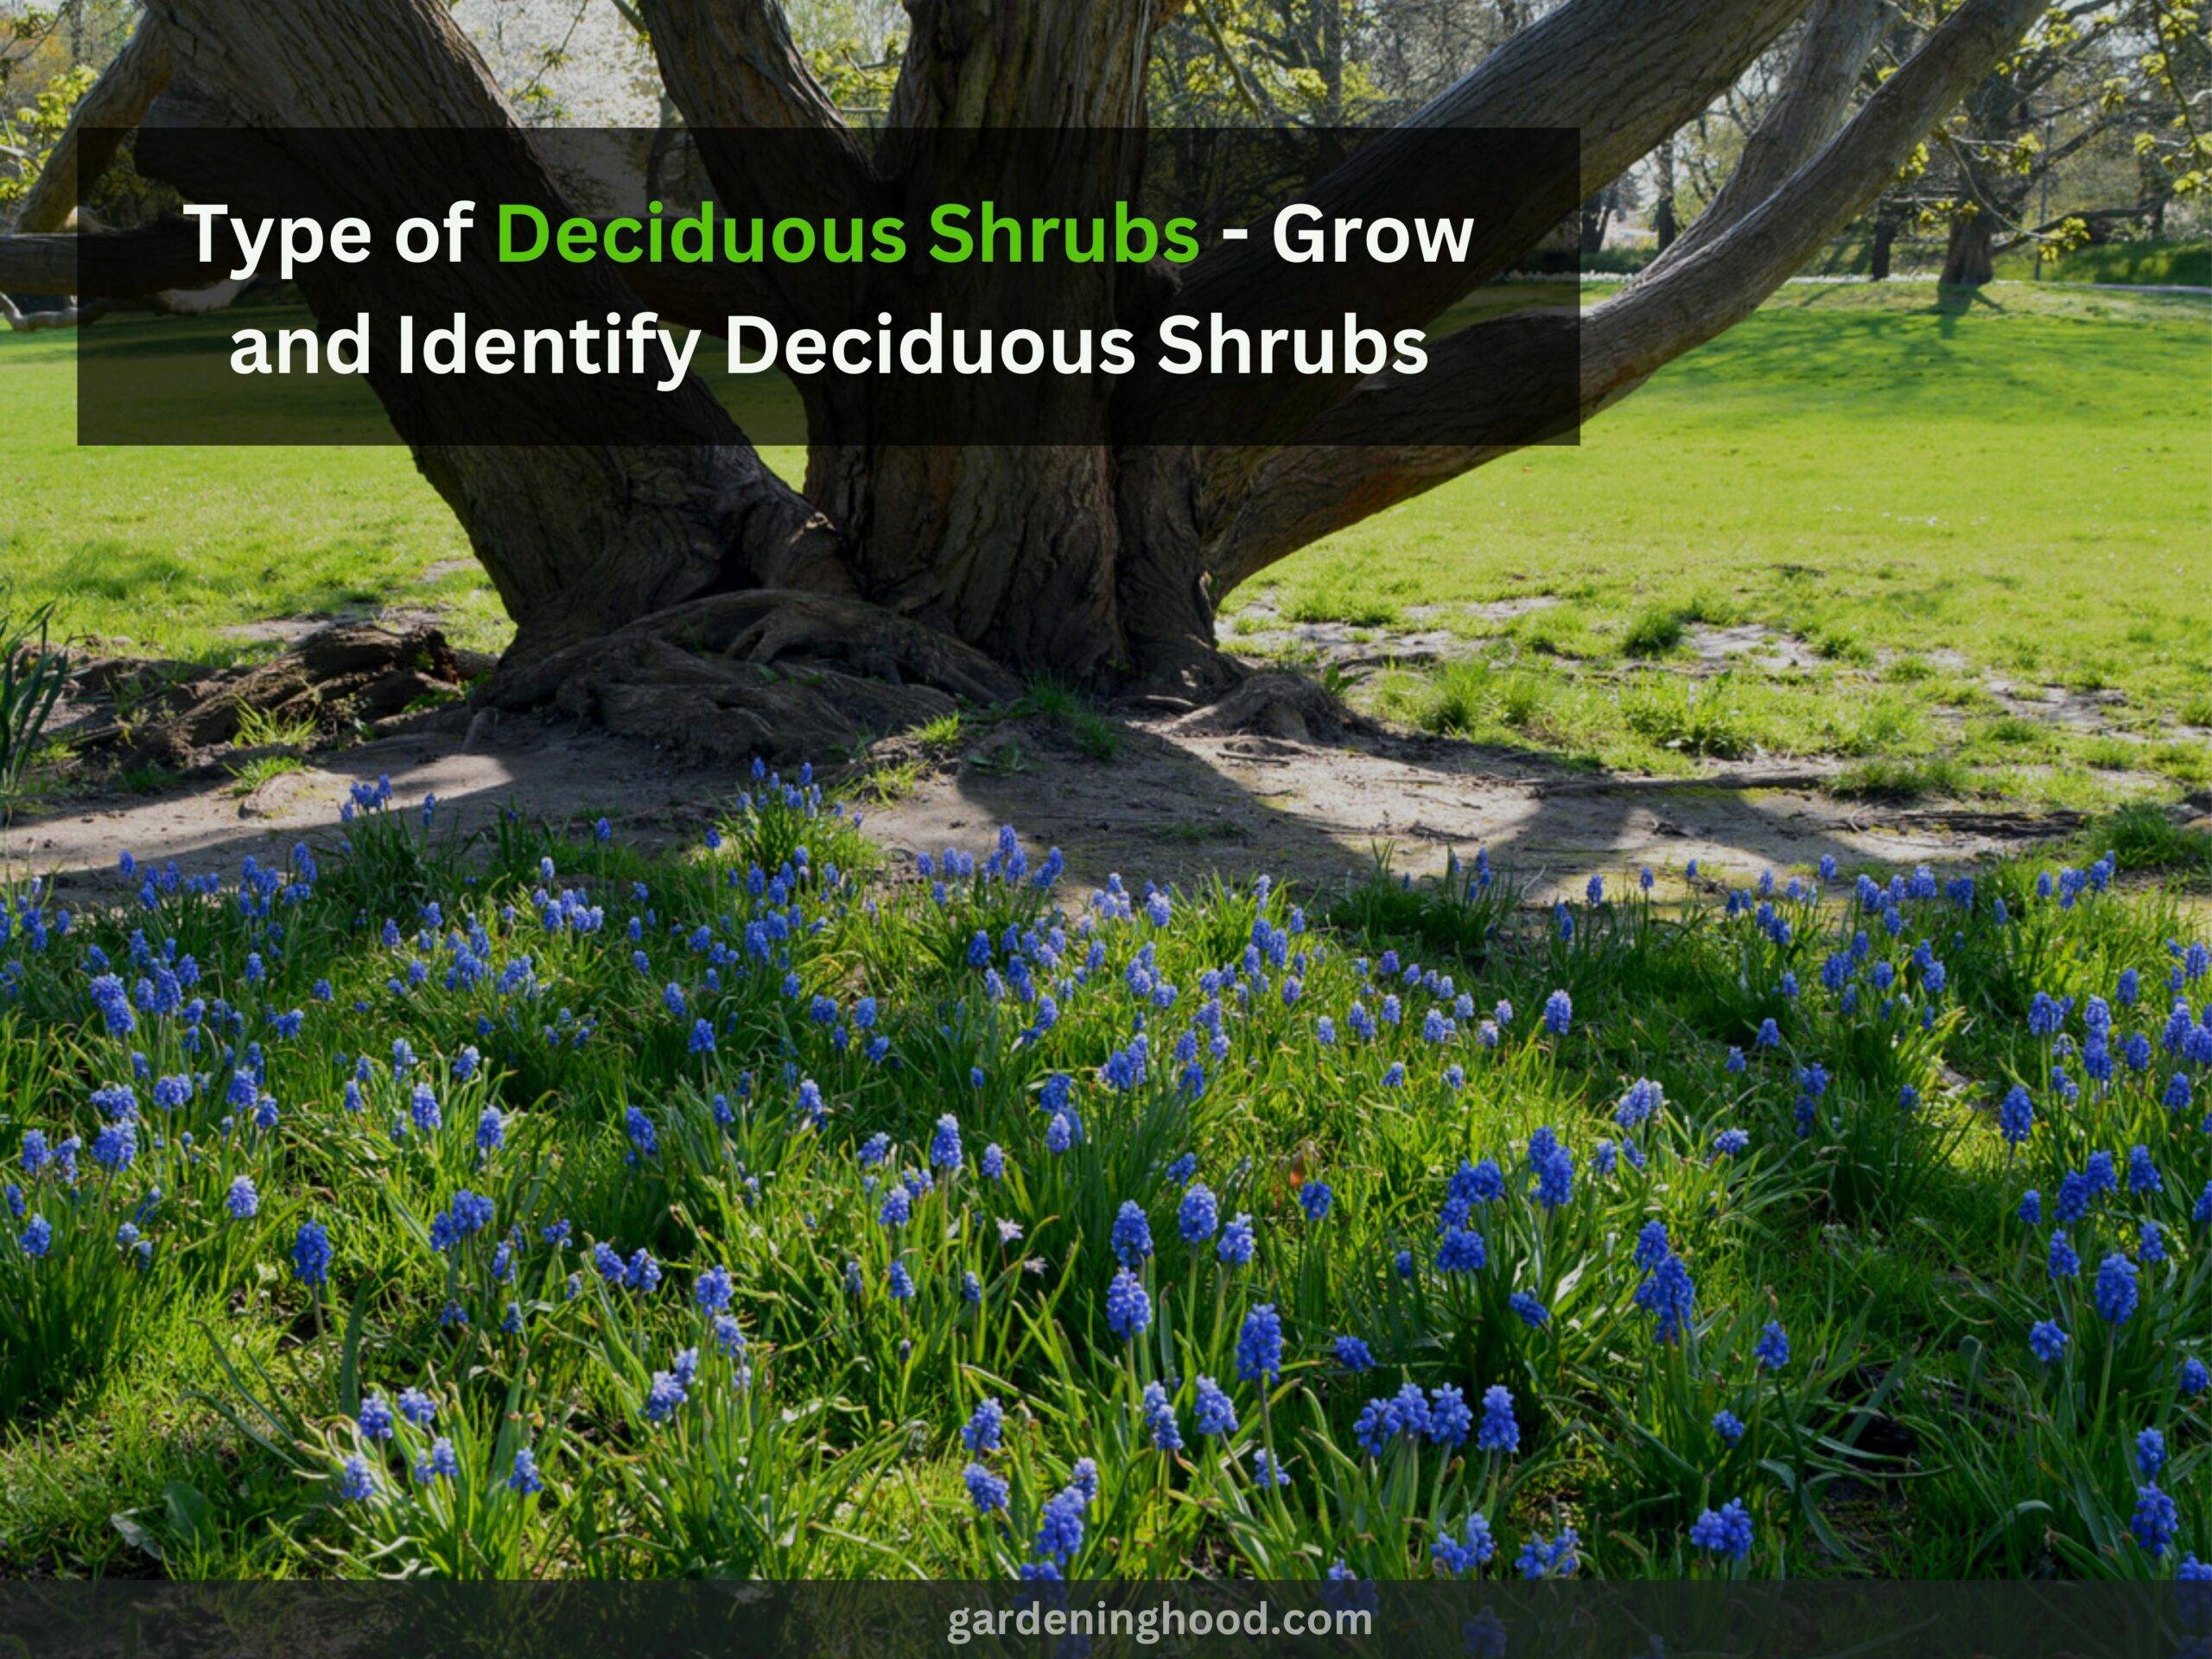 Type of Deciduous Shrubs - Grow and Identify Deciduous Shrubs